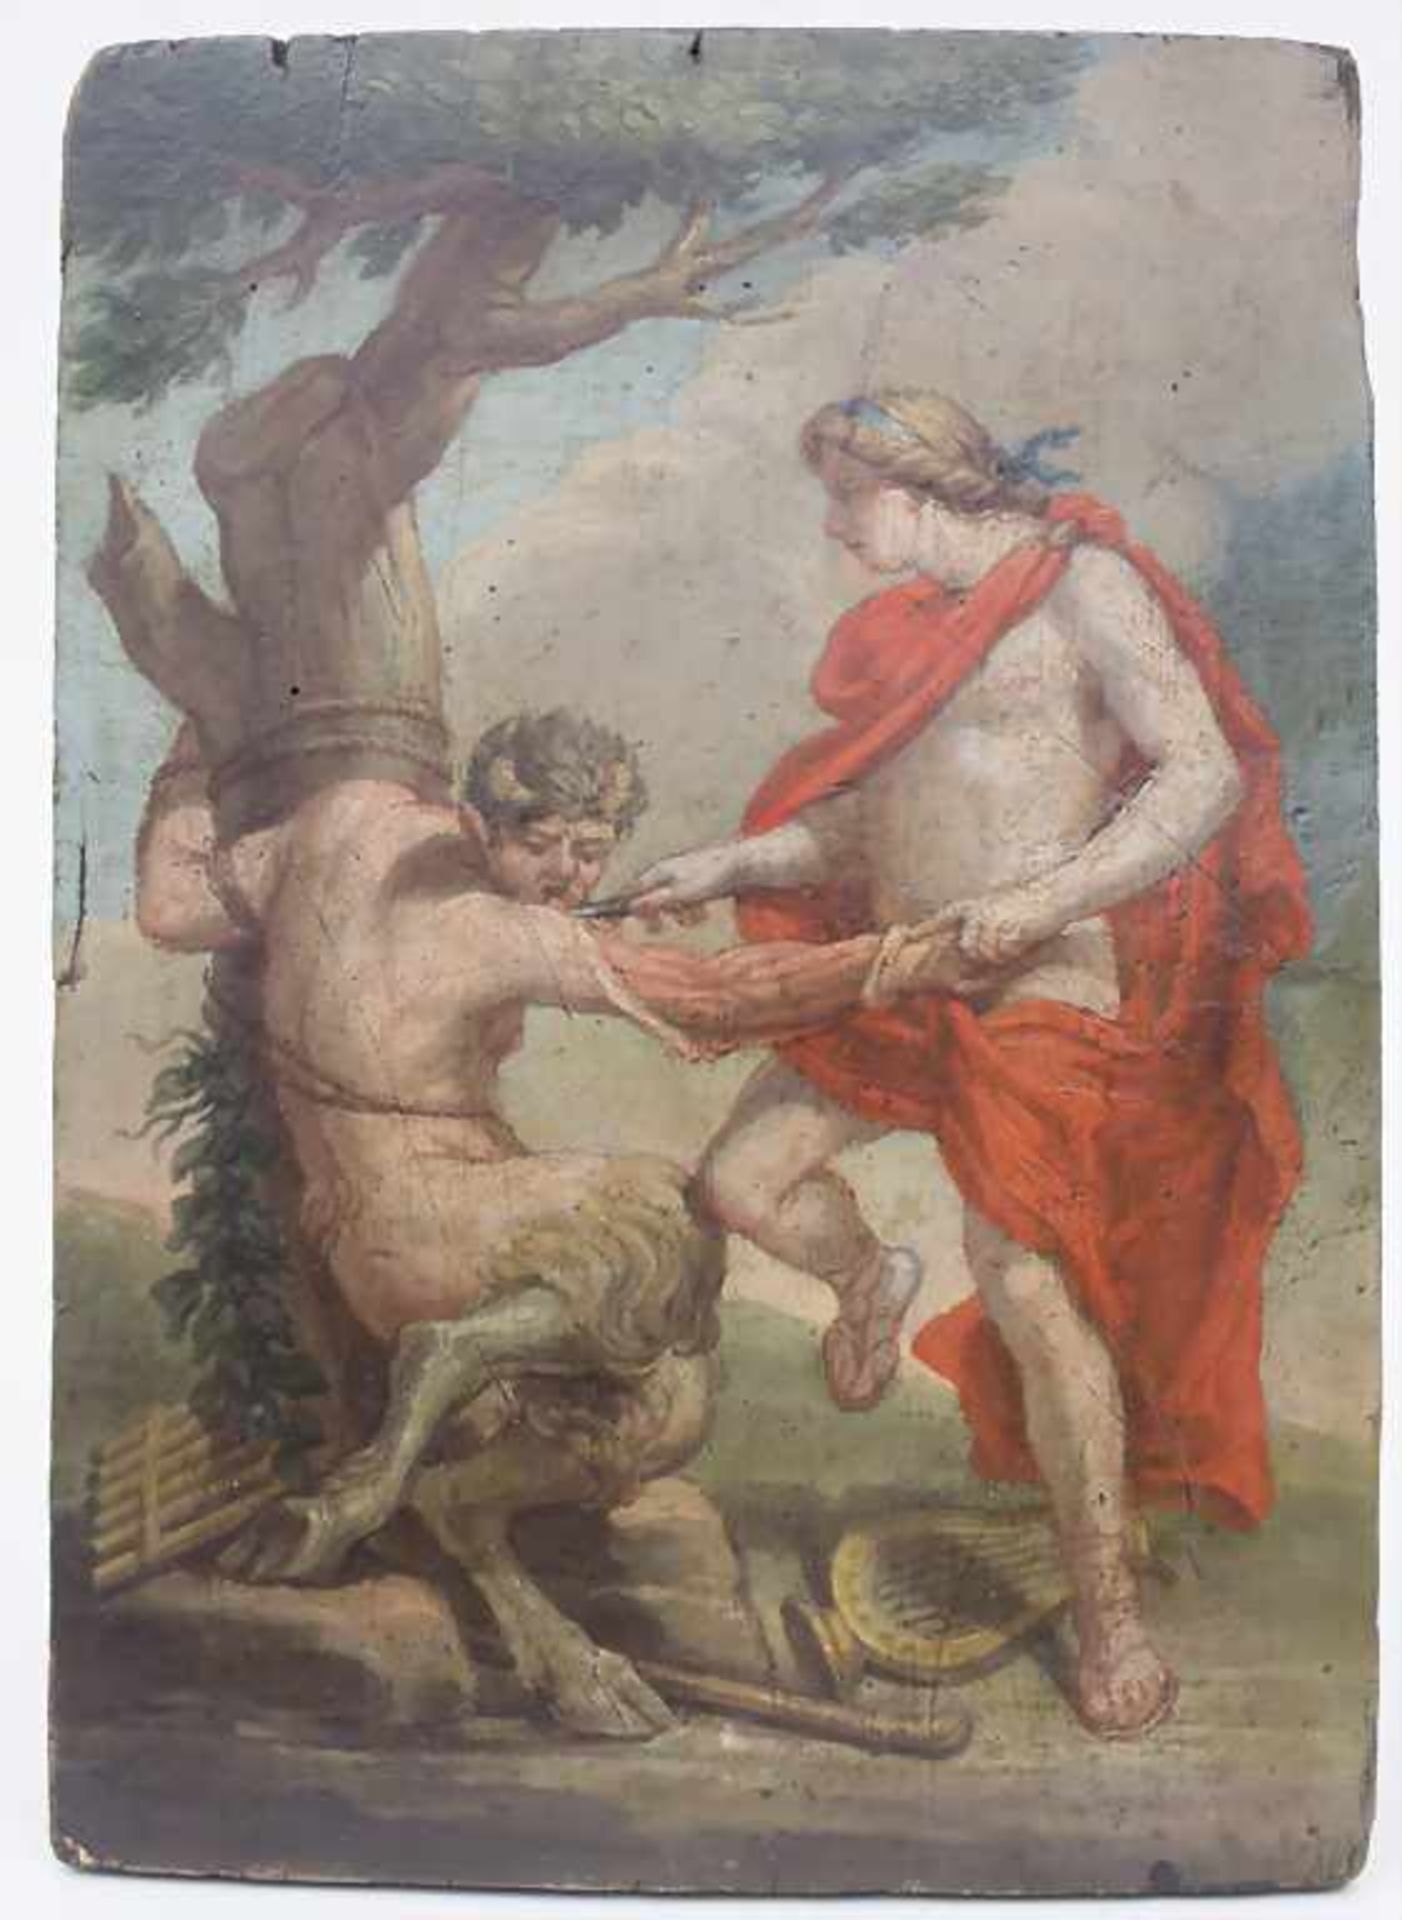 Künstler des 18. Jh., 'Apollon häutet den Satyr Marsyas' / 'Apoll skins the satyr Marsyas'<b